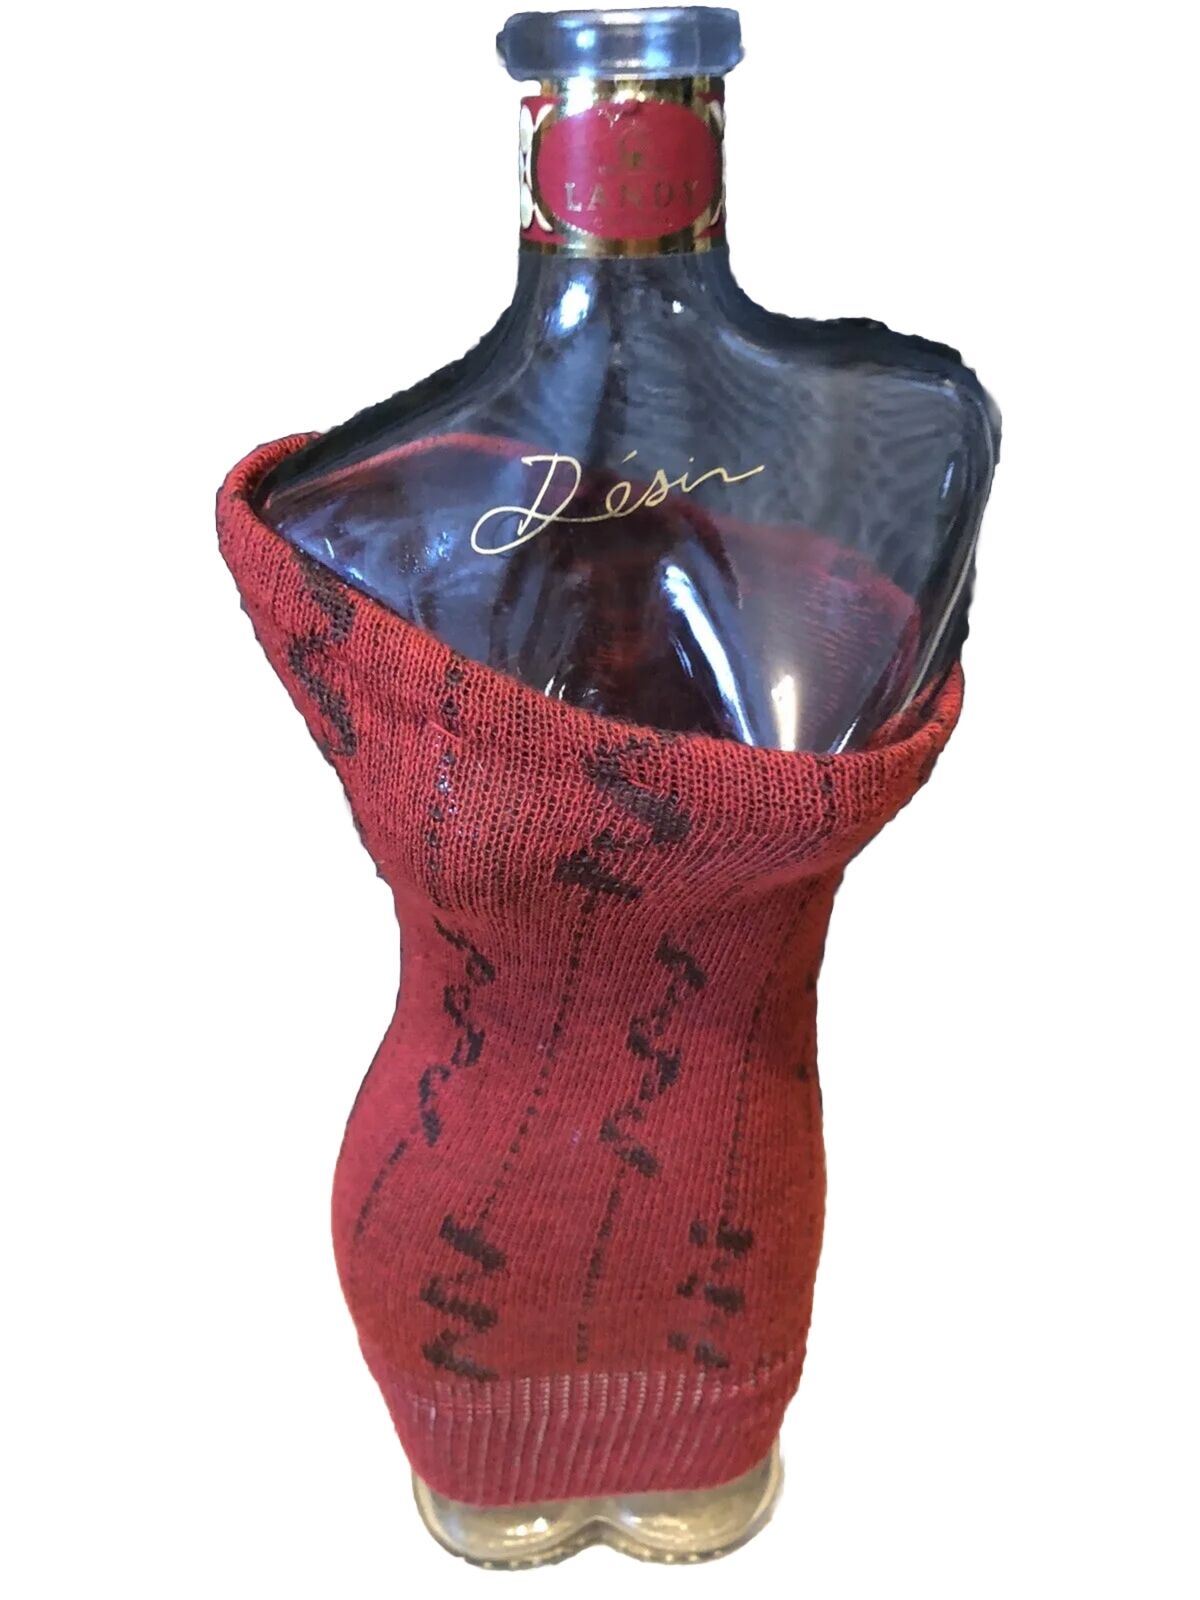 Landy Desir Cognac Whisky Empty Bottle RARE Exclusive Collector’s Item